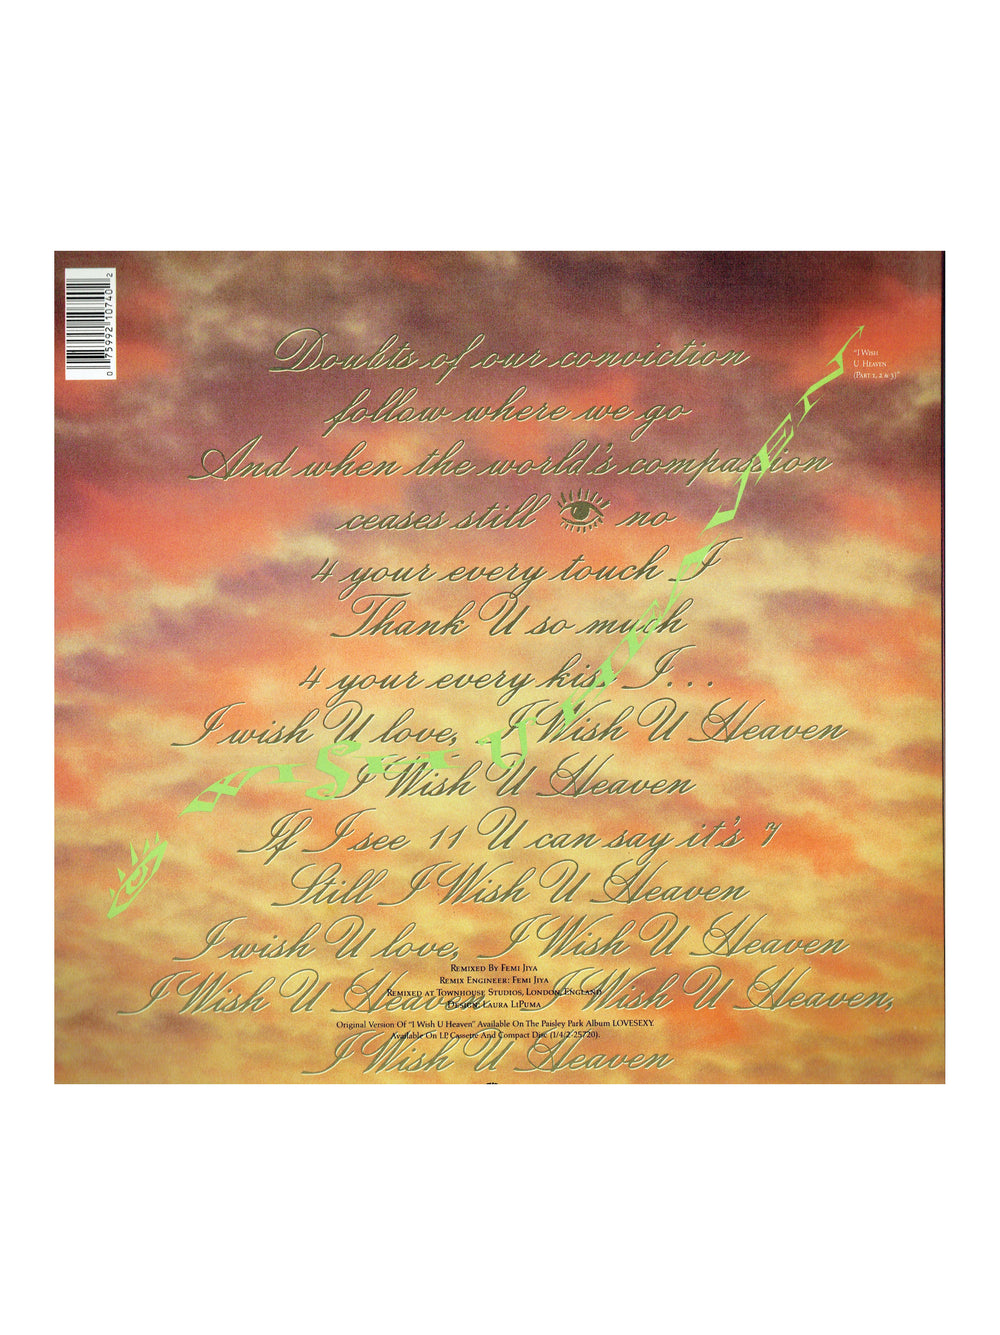 Prince I Wish U Heaven Scarlett Pussy 12 inch Vinyl Single Original USA Release